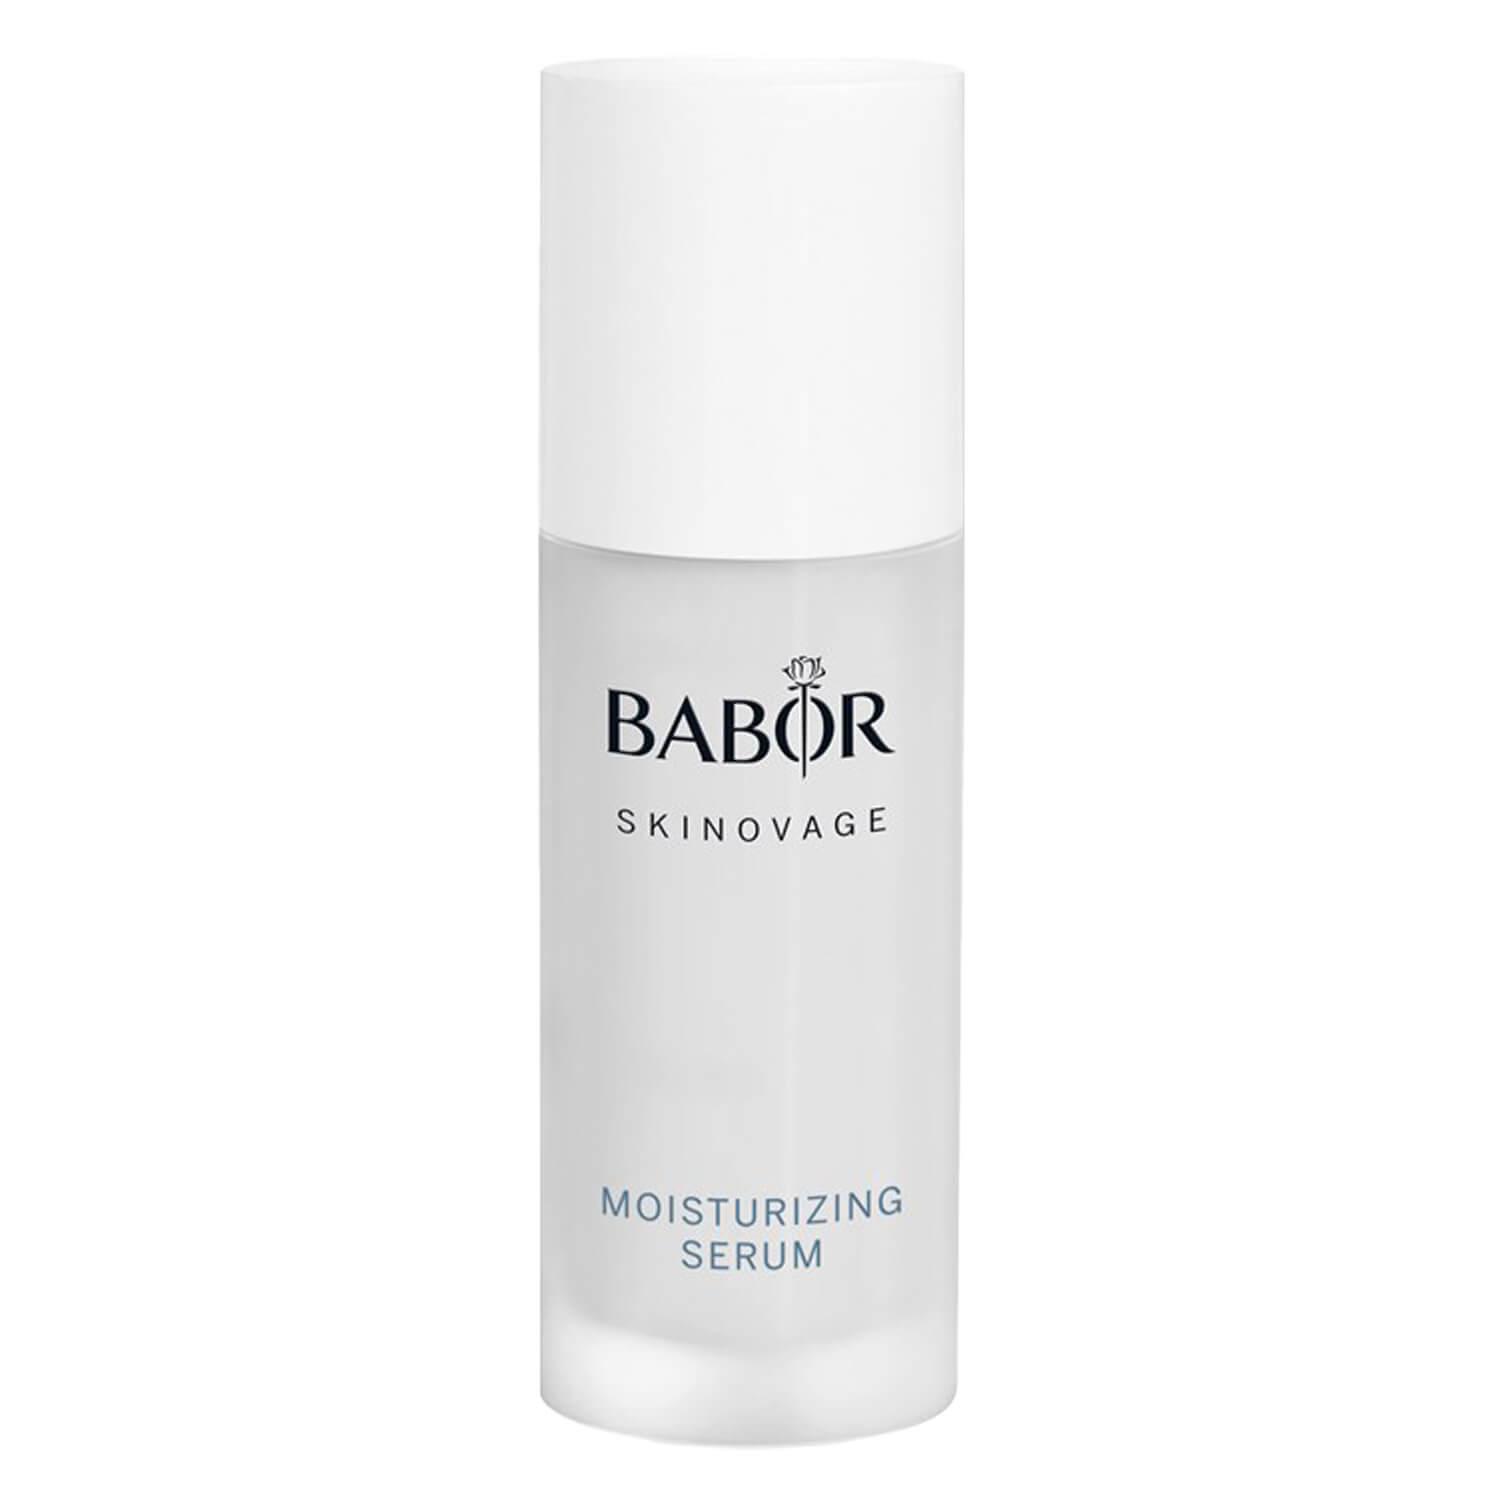 BABOR SKINOVAGE - Moisturizing Serum Dry Skin